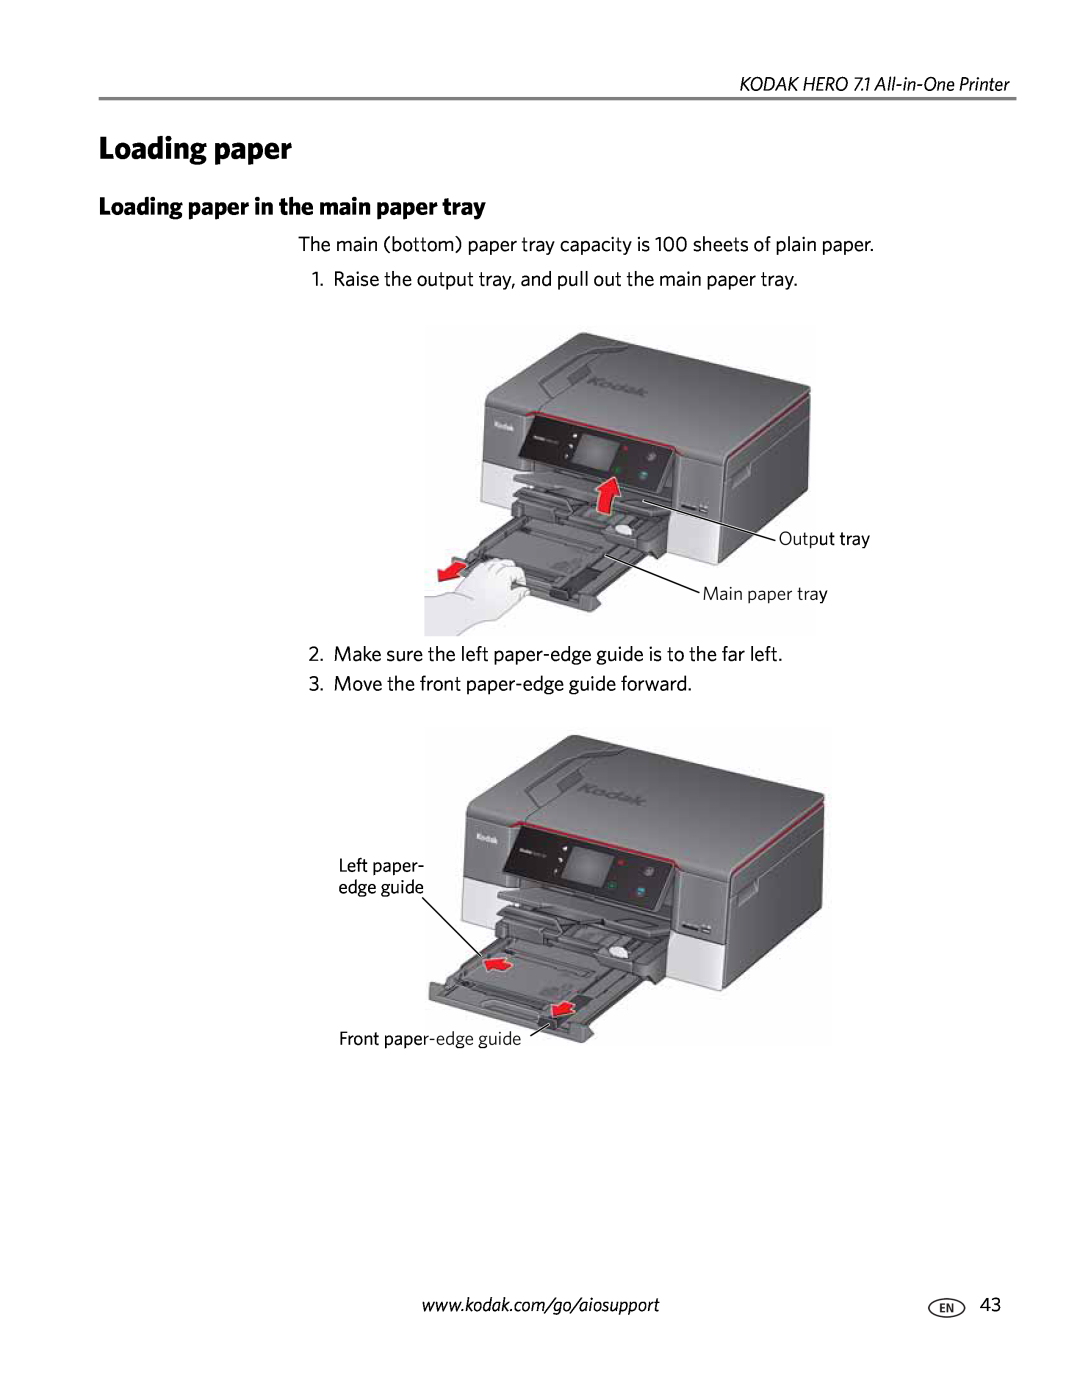 Kodak manual Loading paper in the main paper tray, KODAK HERO 7.1 All-in-One Printer, Output tray Main paper tray 